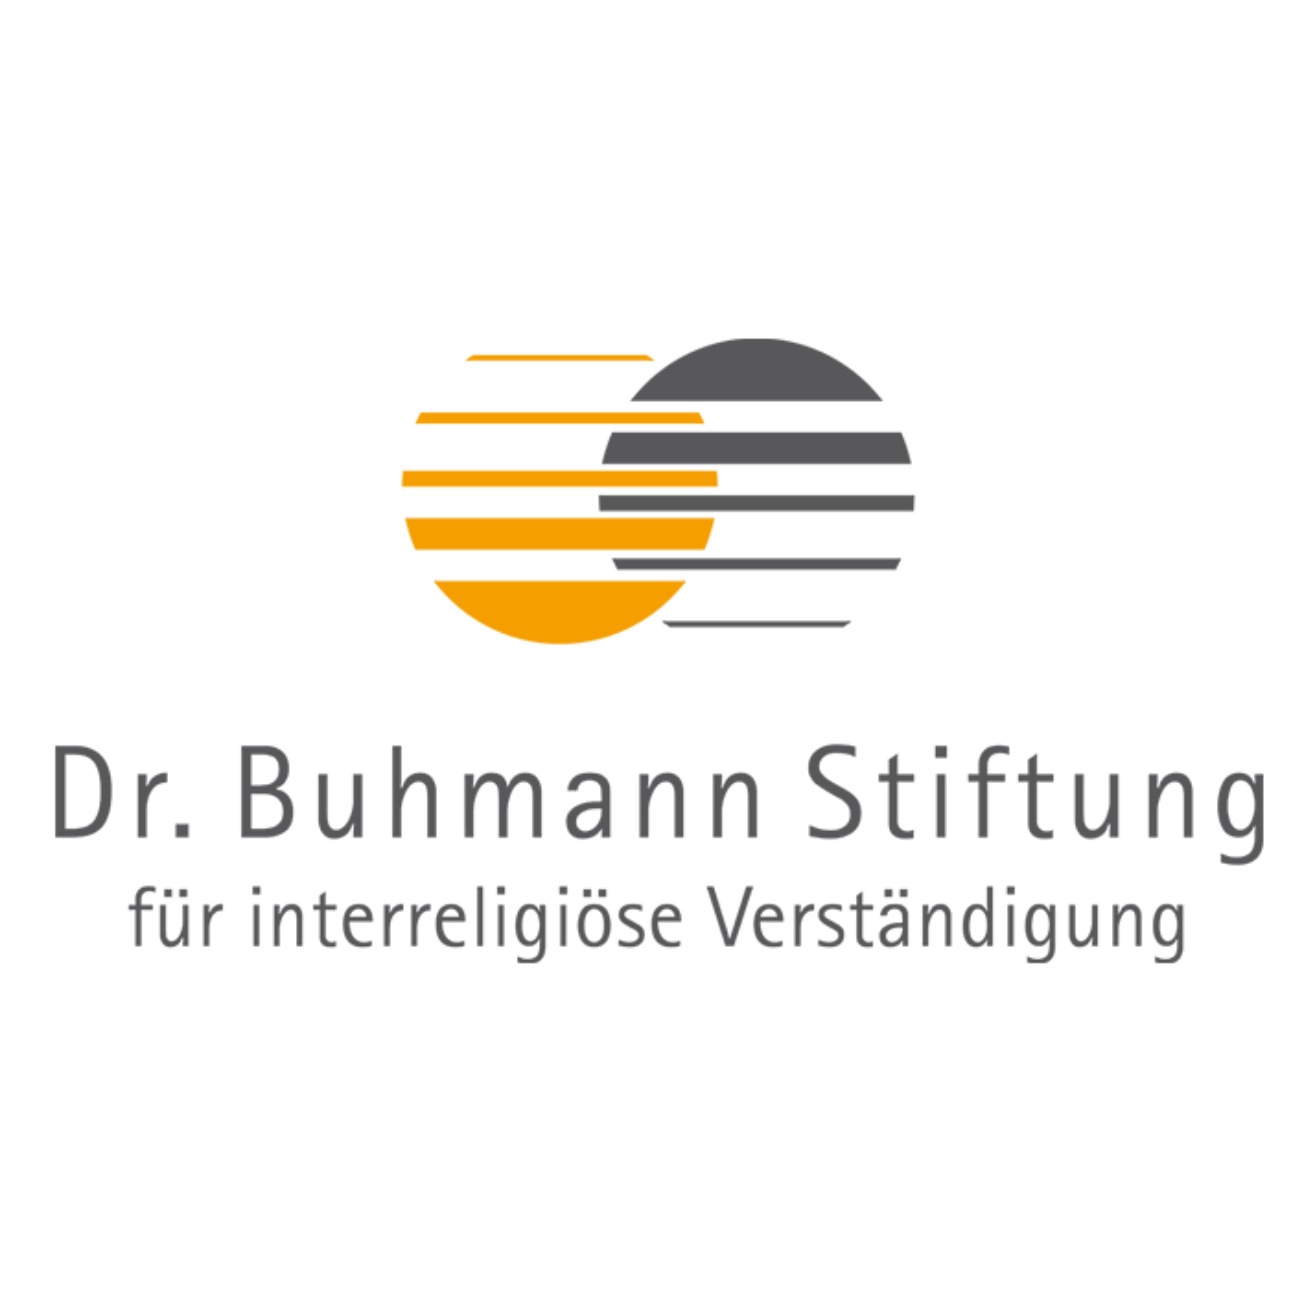 dr buhmann stiftung logo